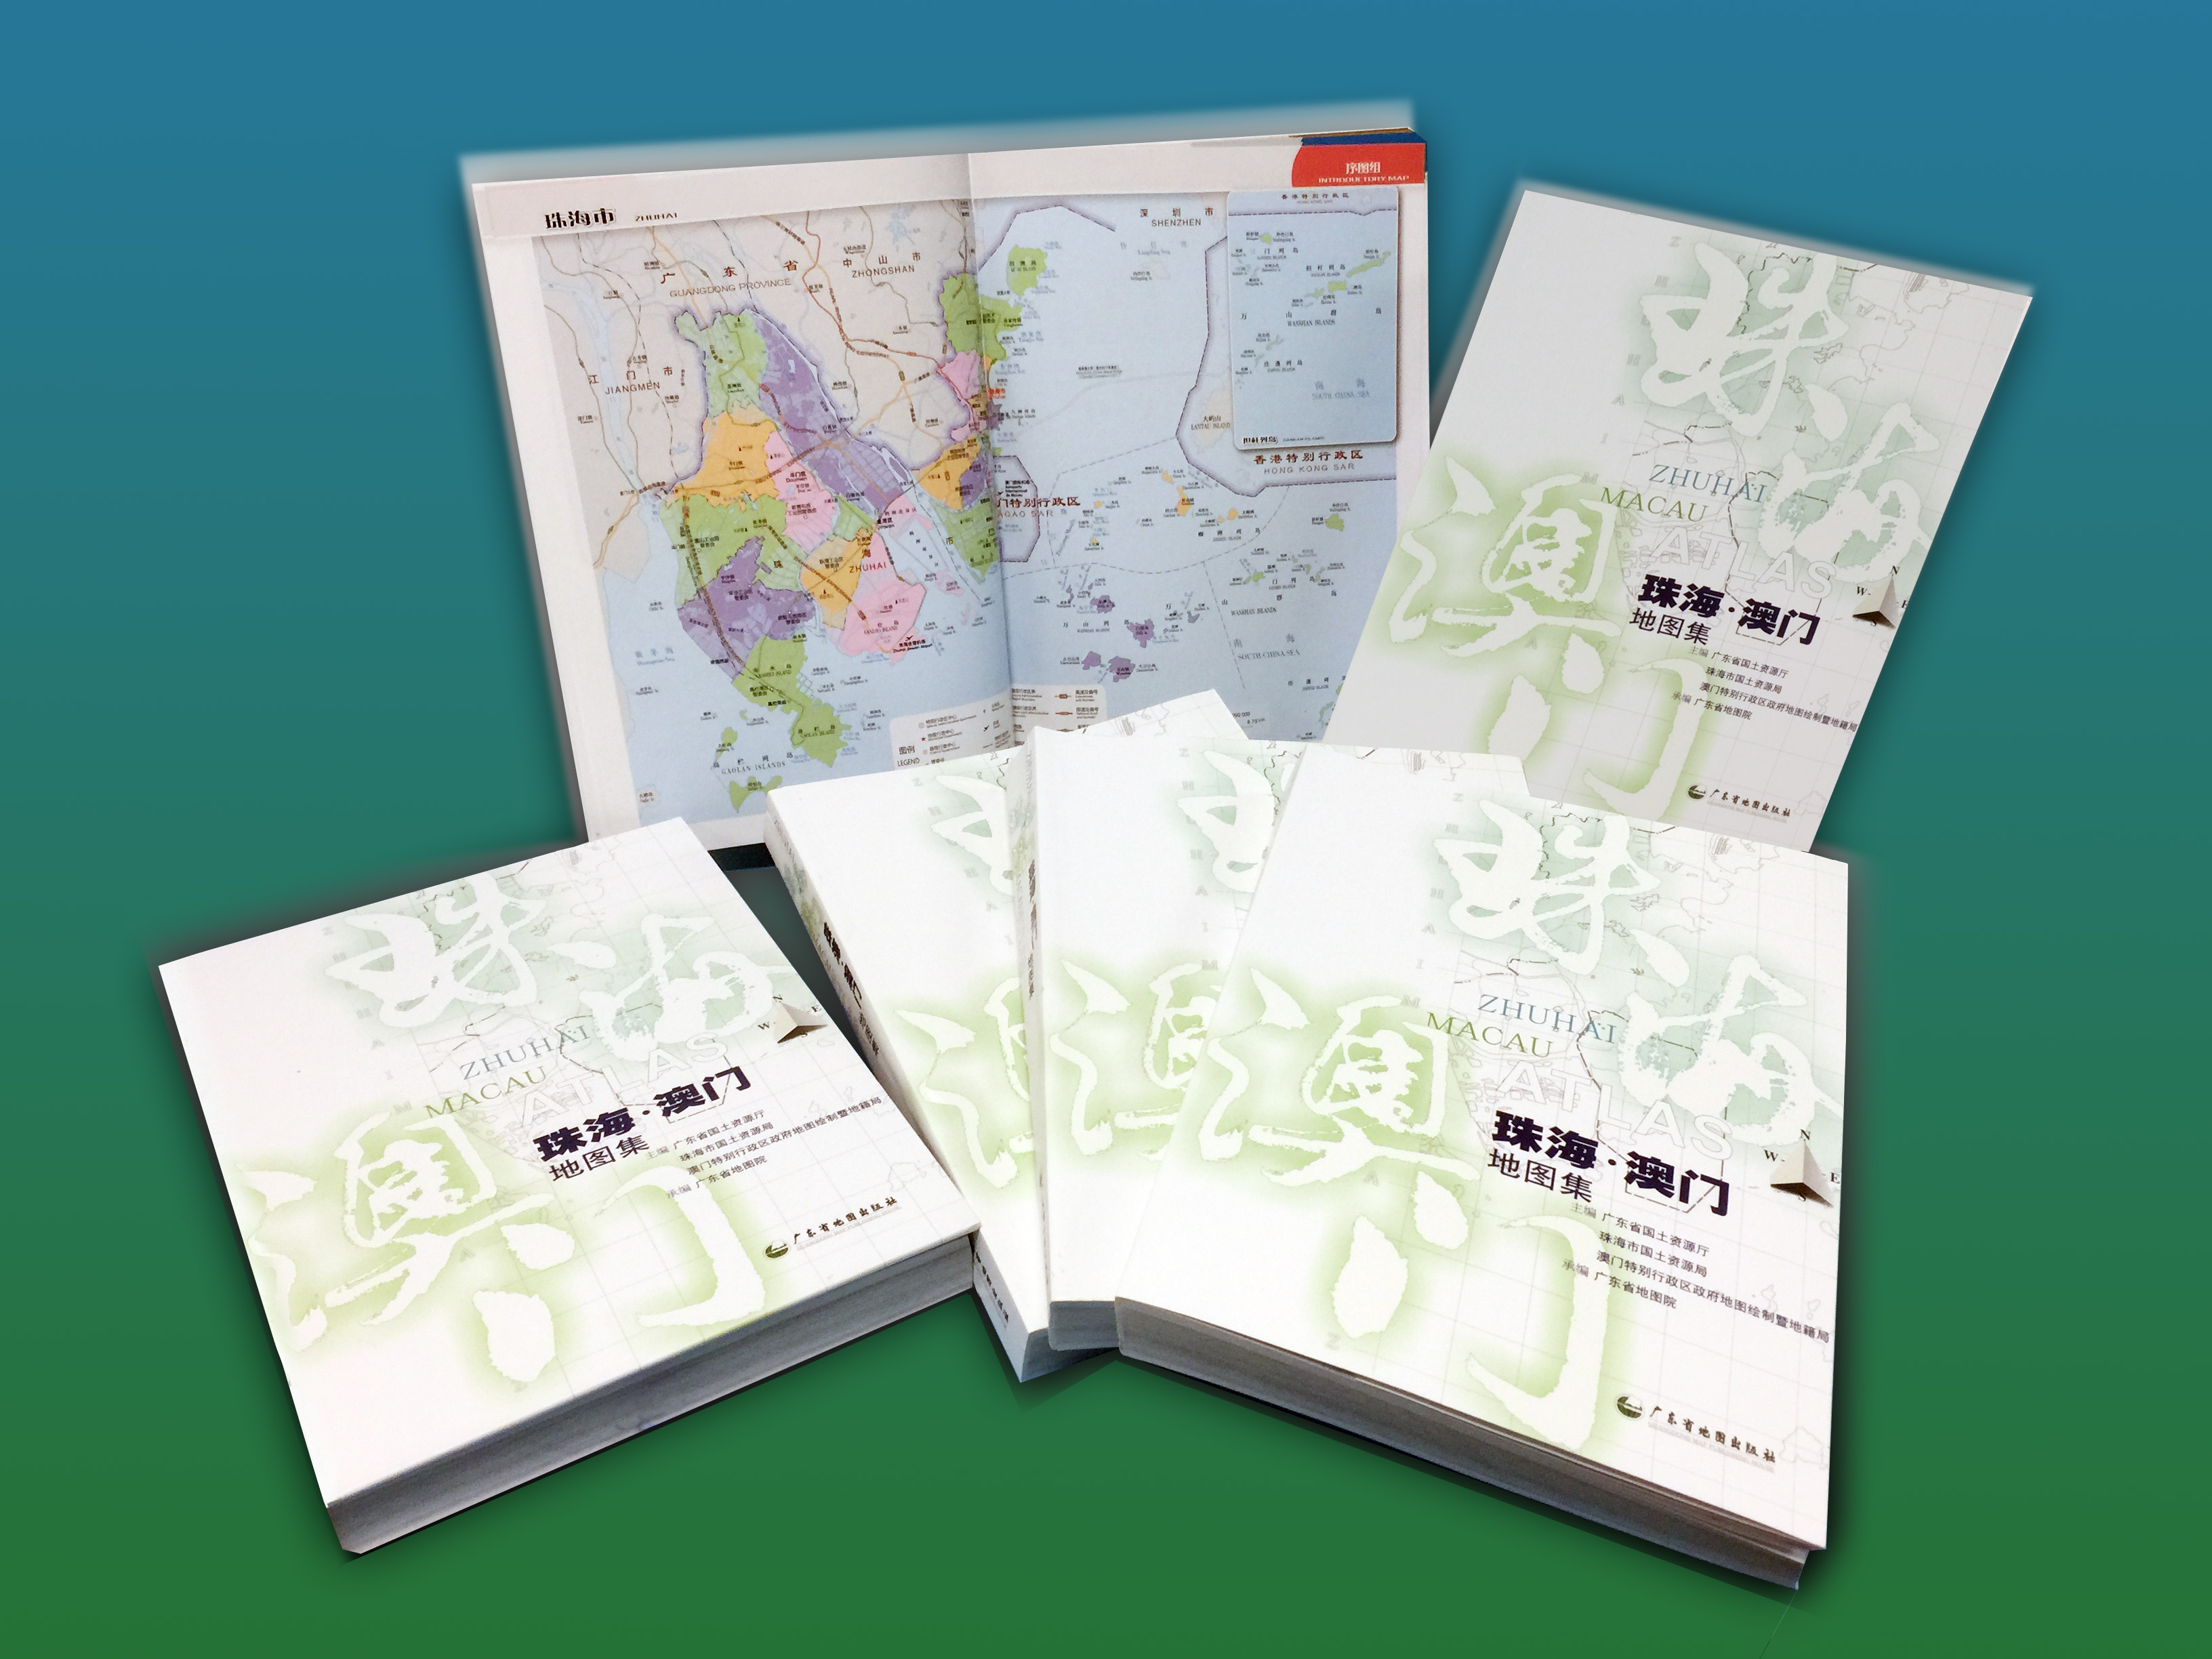 Prémio | “Atlas de Zhuhai-Macau” distinguido na China